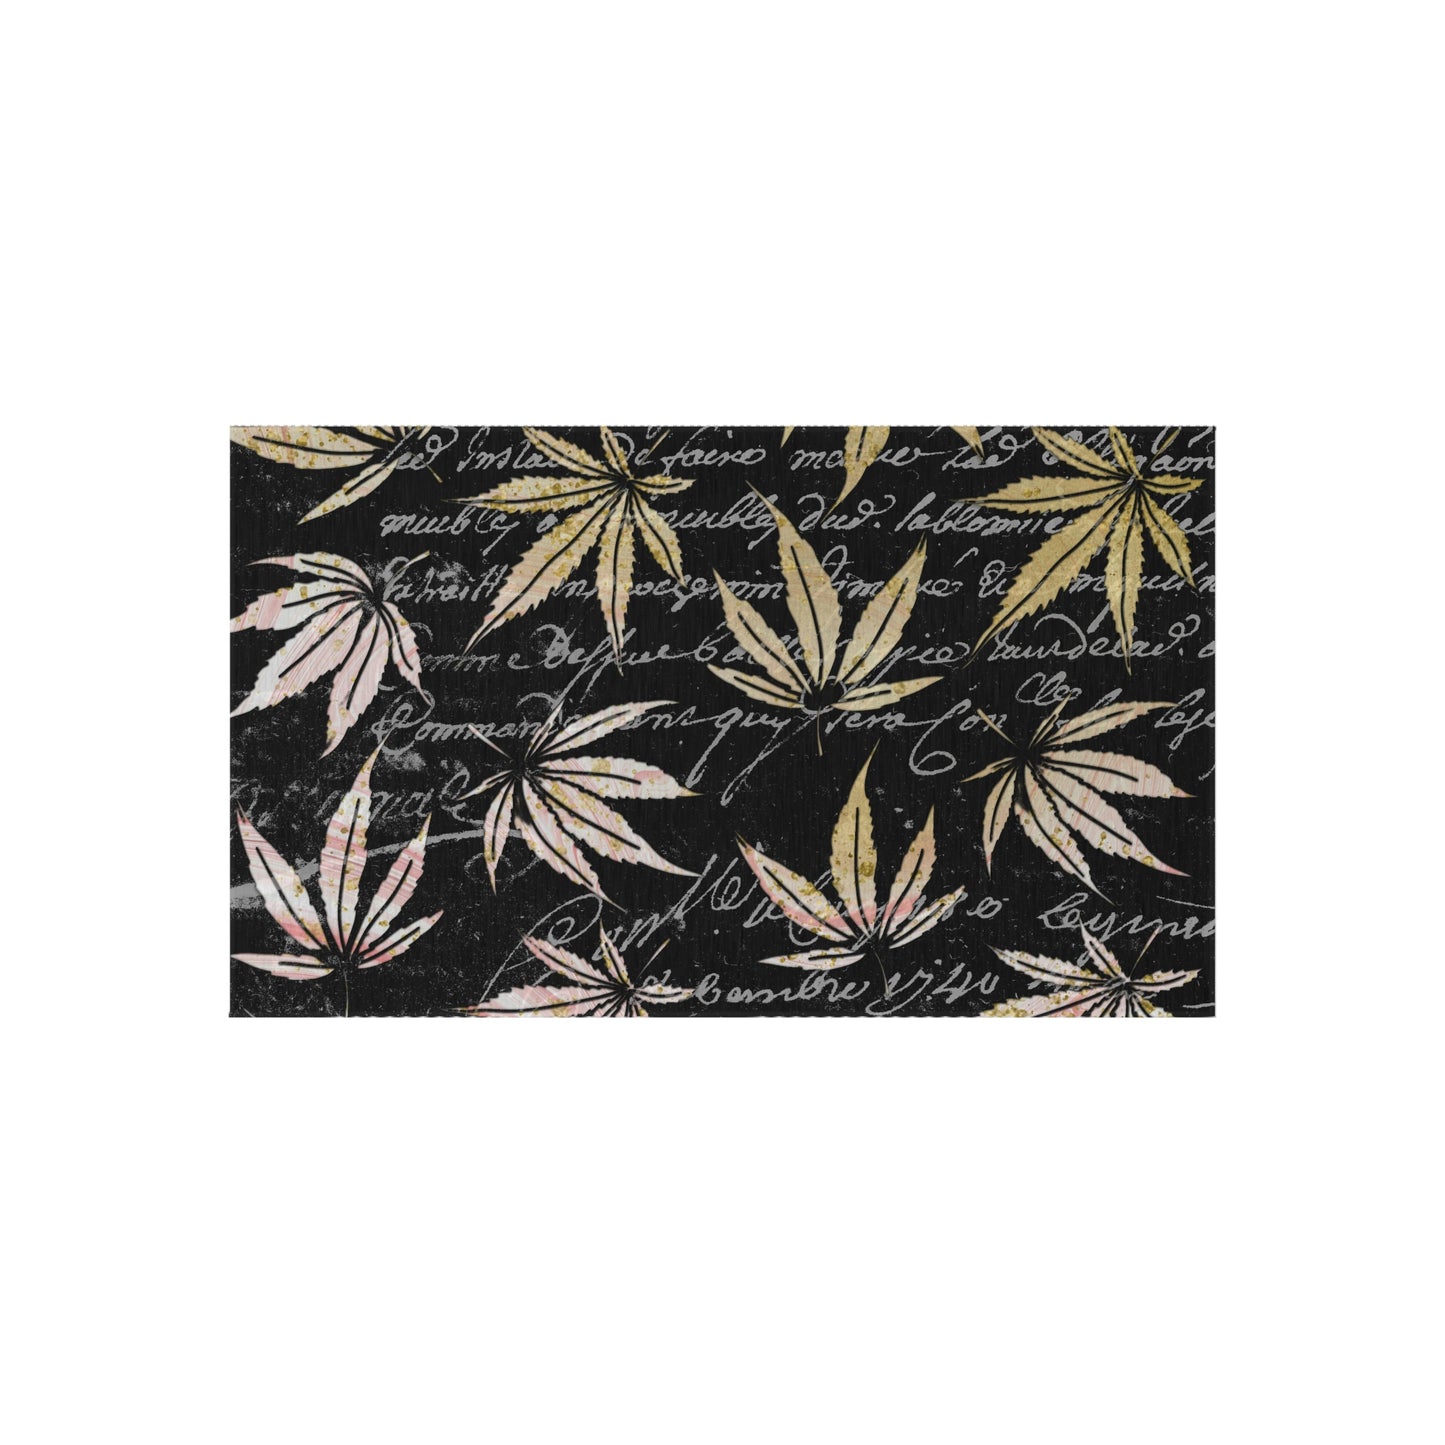 Gold And Black 420 Weed Pot Marijuana Leaf Outdoor Rug